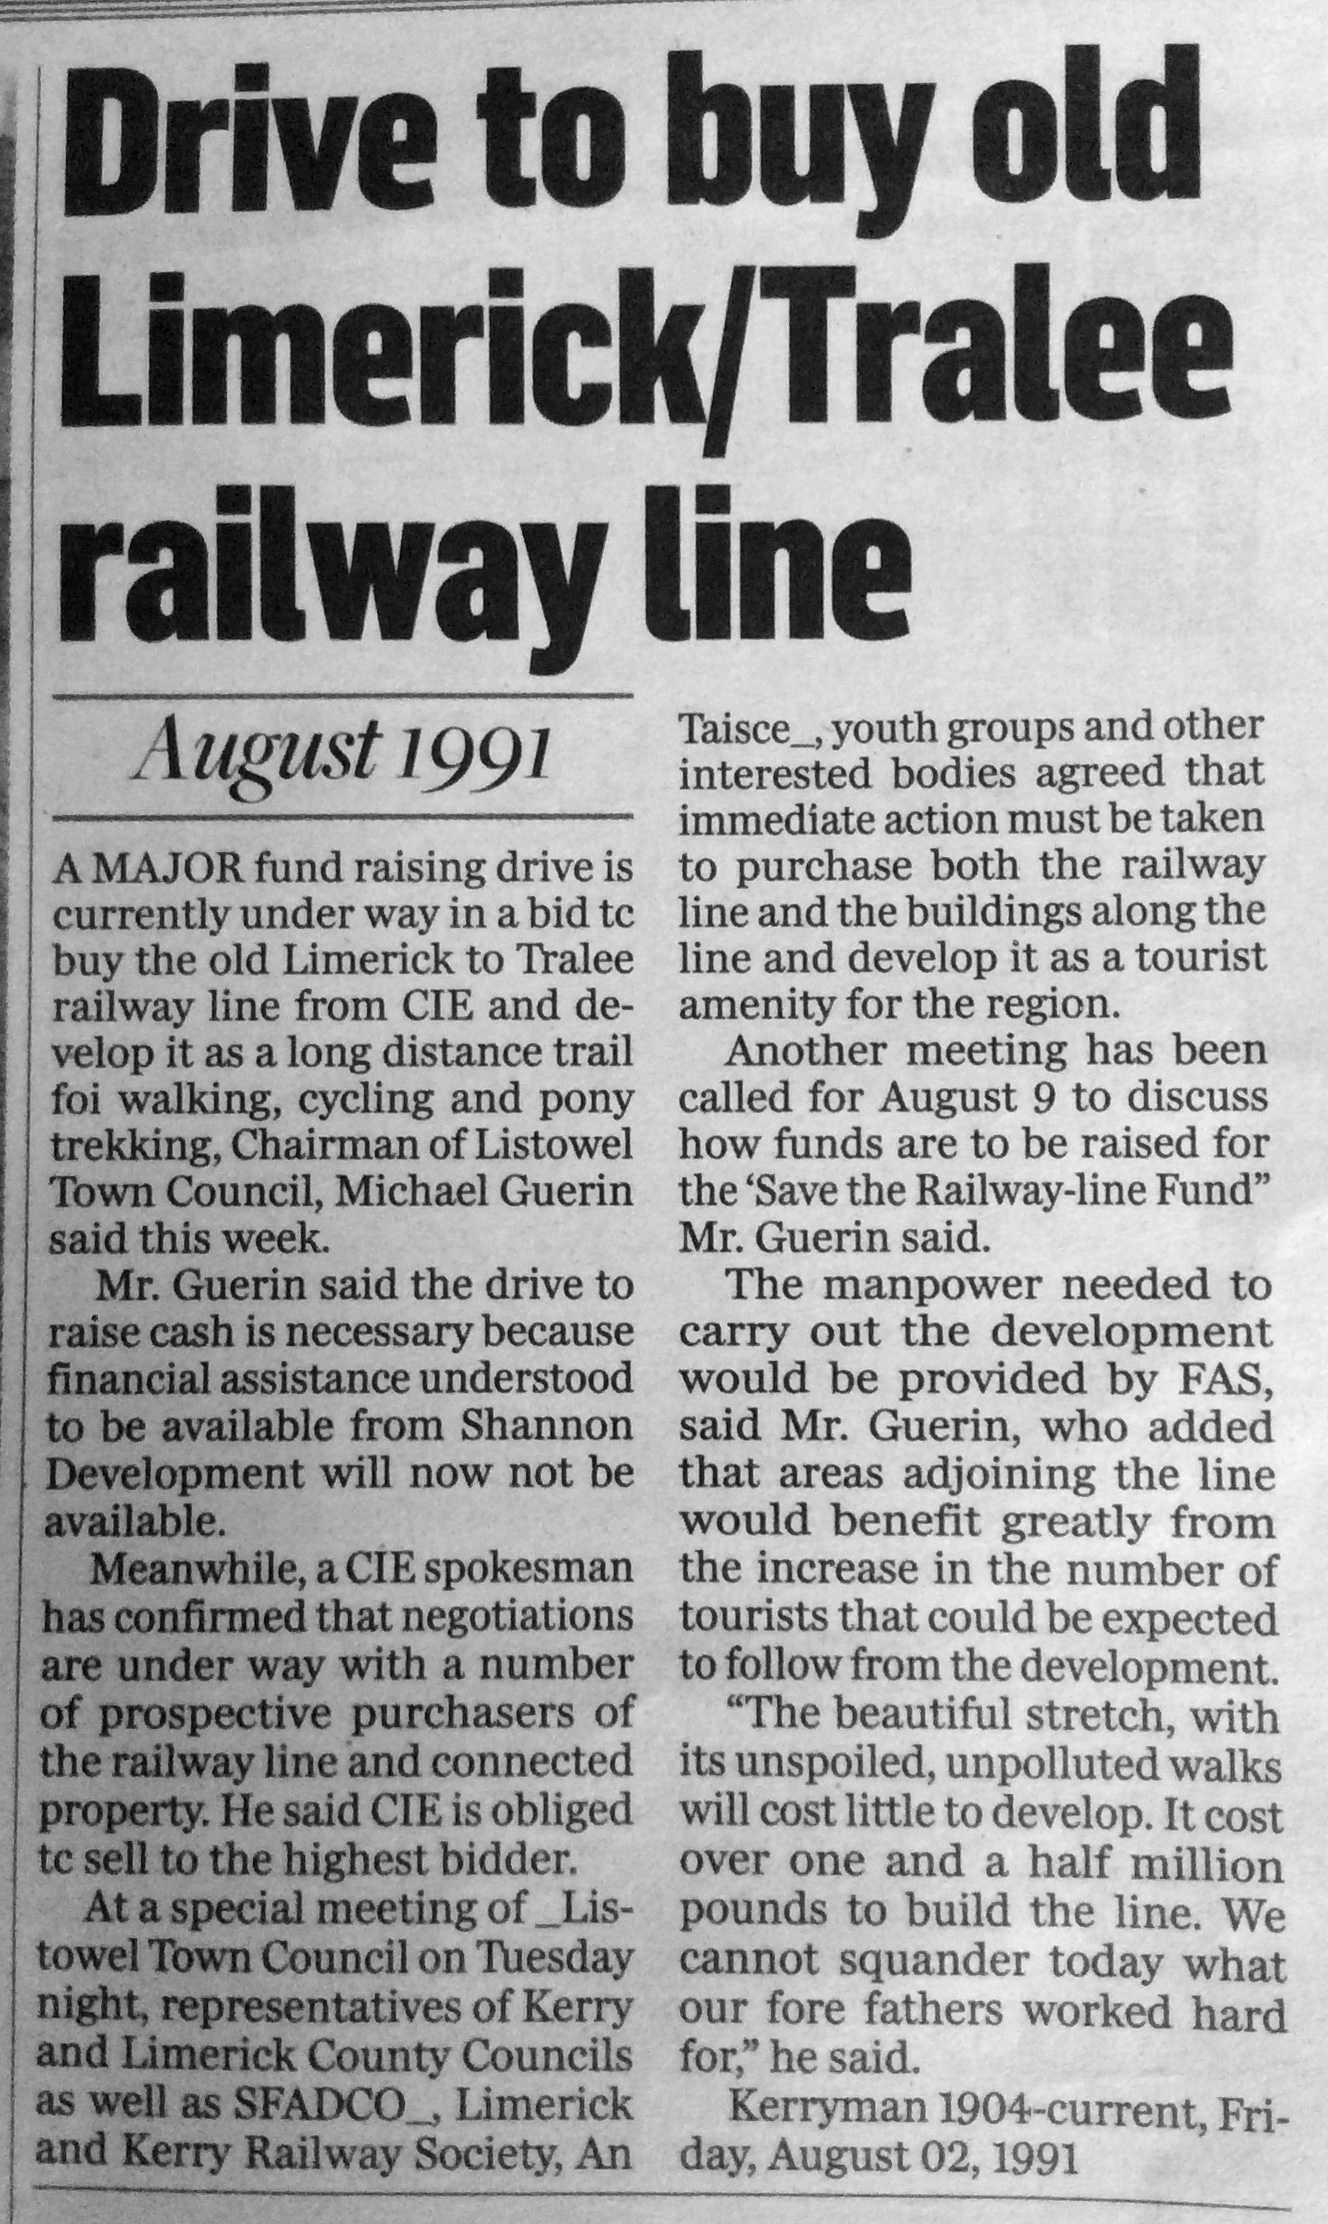 Drive to buy railway line 1991